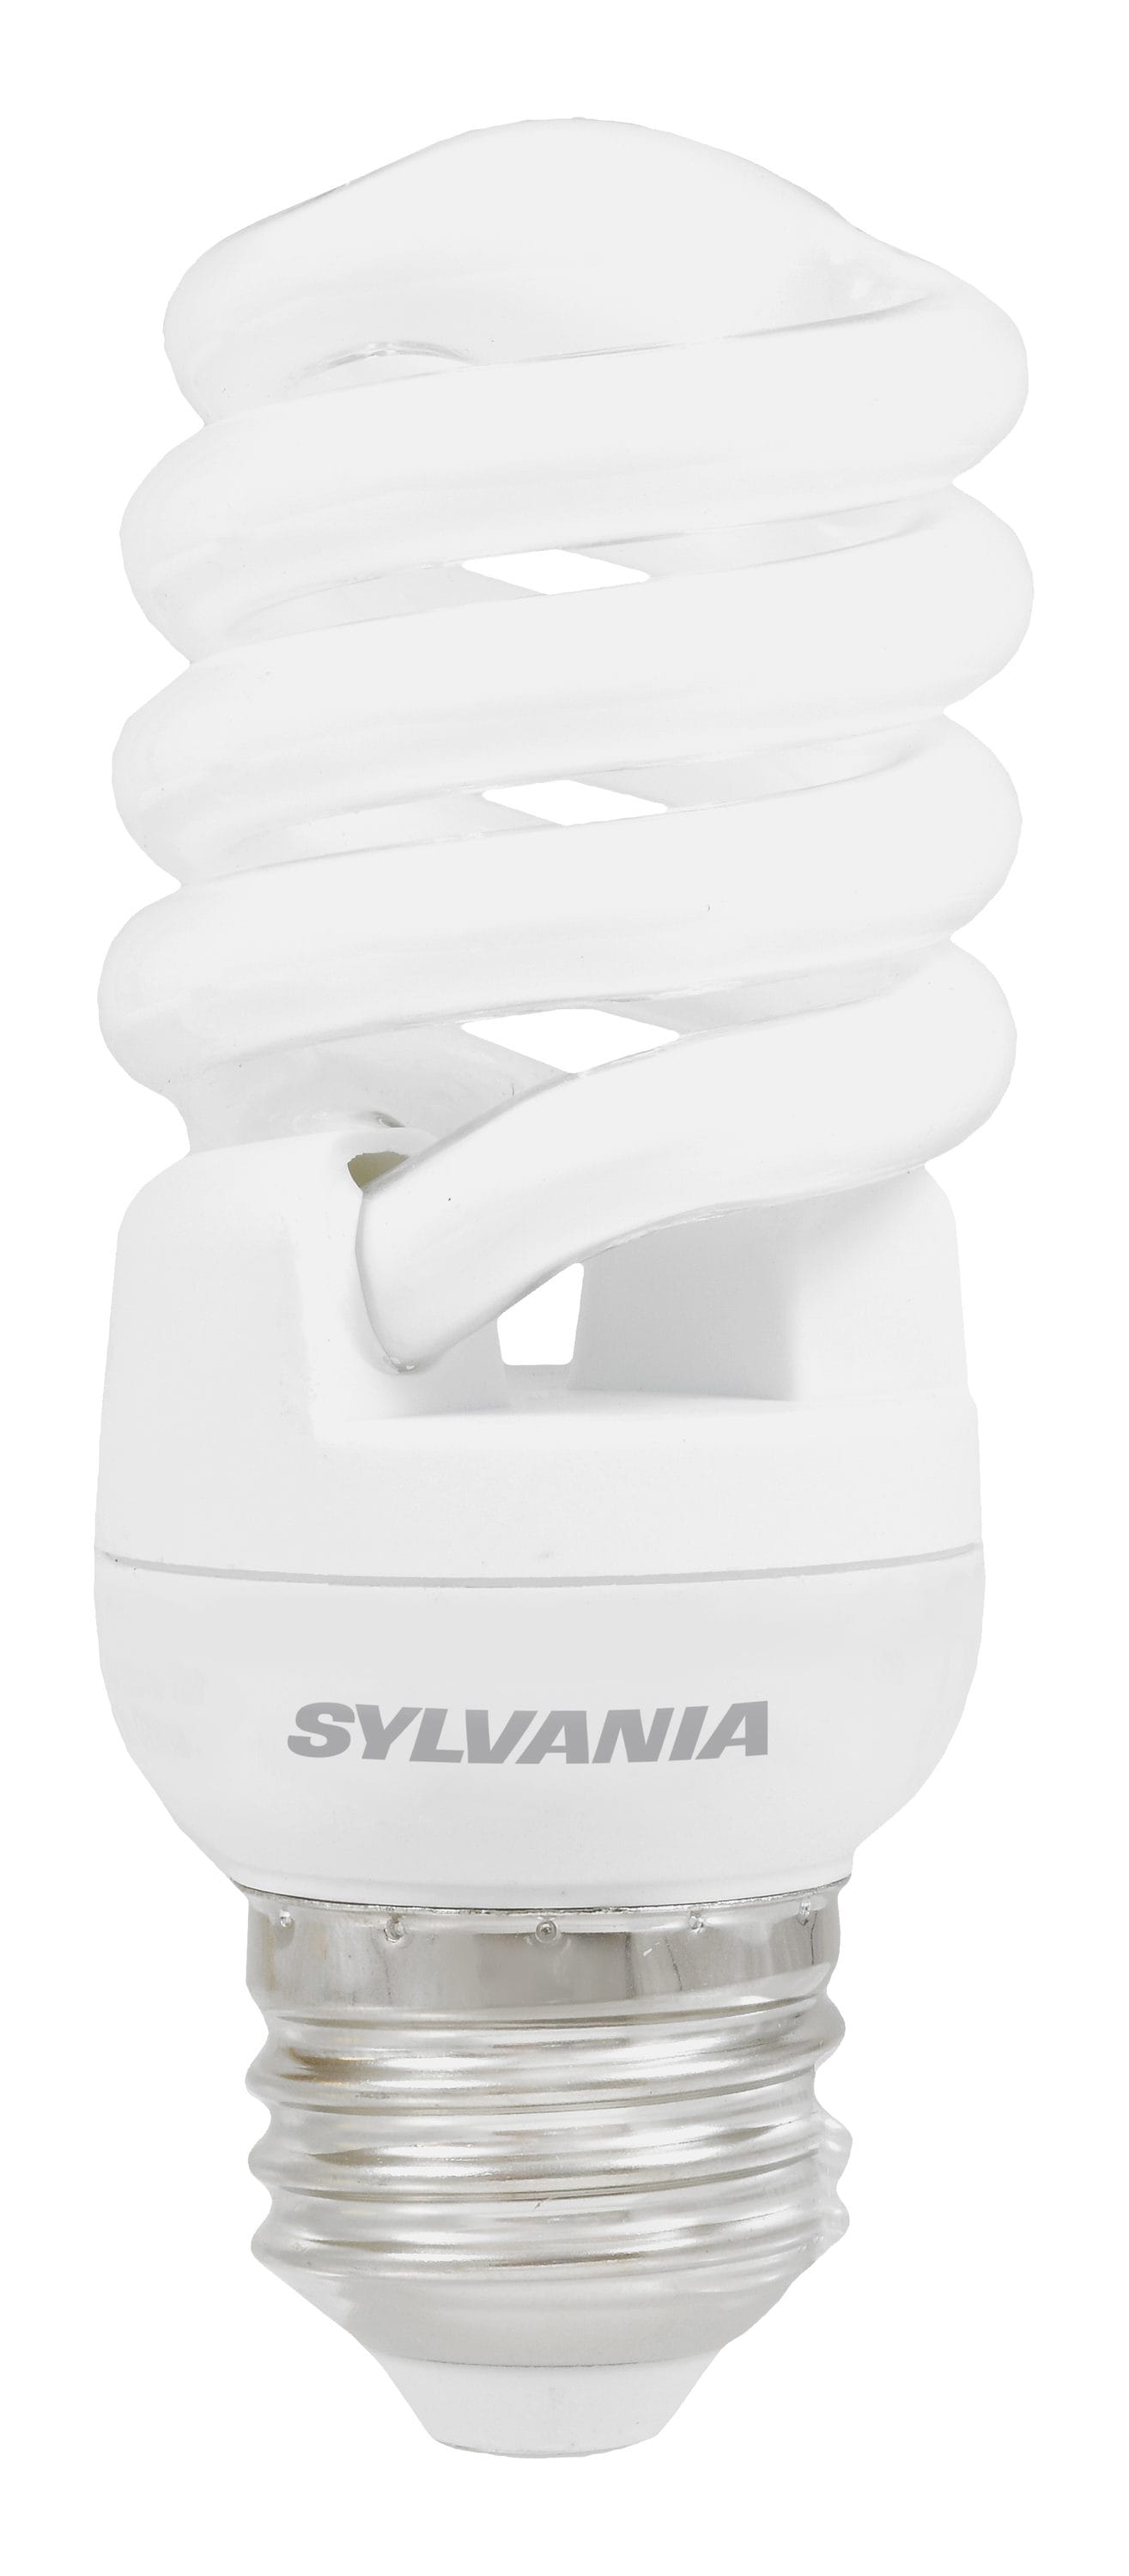 Sylvania SA 155 20 Amps 60 Minute Digital Auto Shut Off Timer  NEW  Lights Fans 